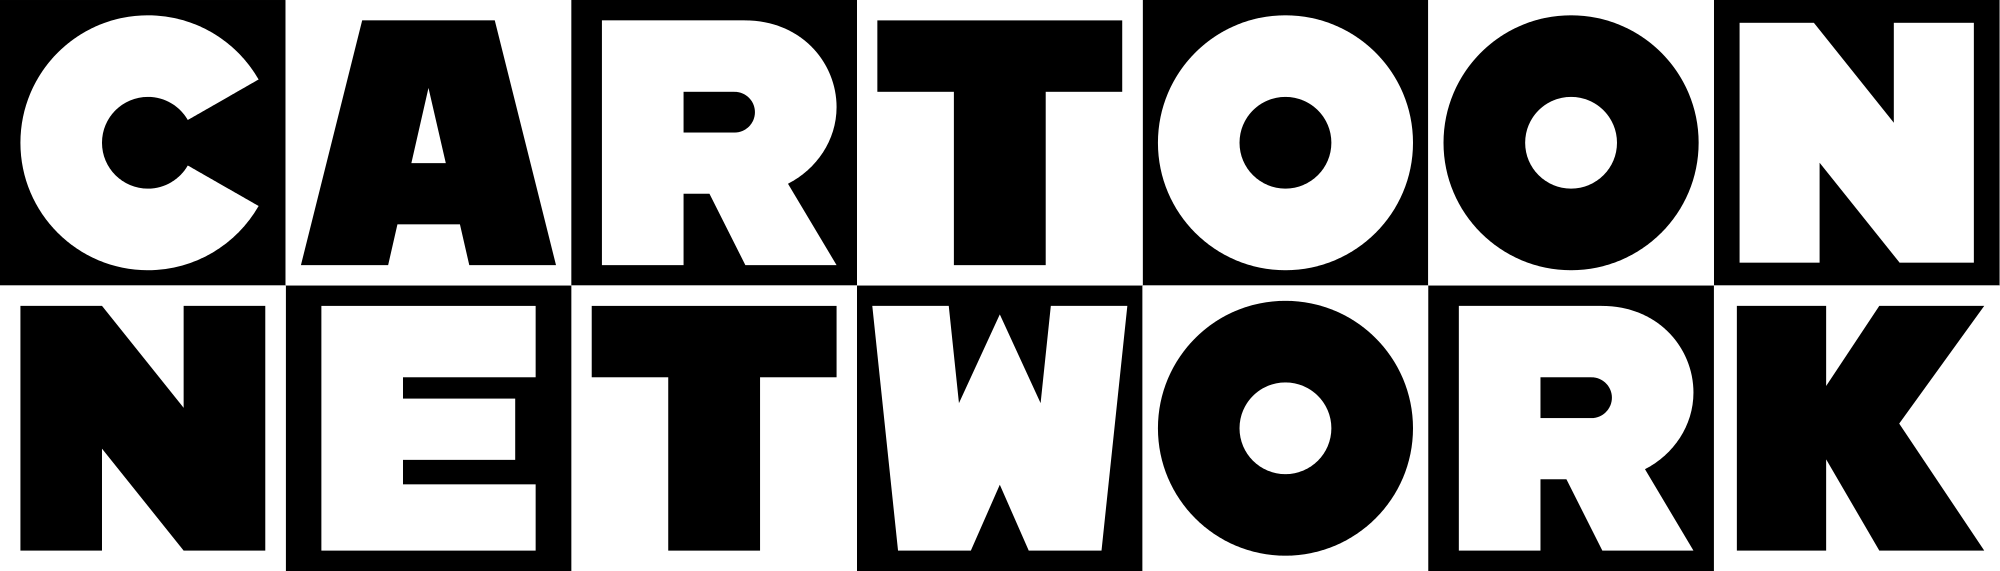 File:Cartoon Network Studios 1st logo v1.png - Wikimedia Commons